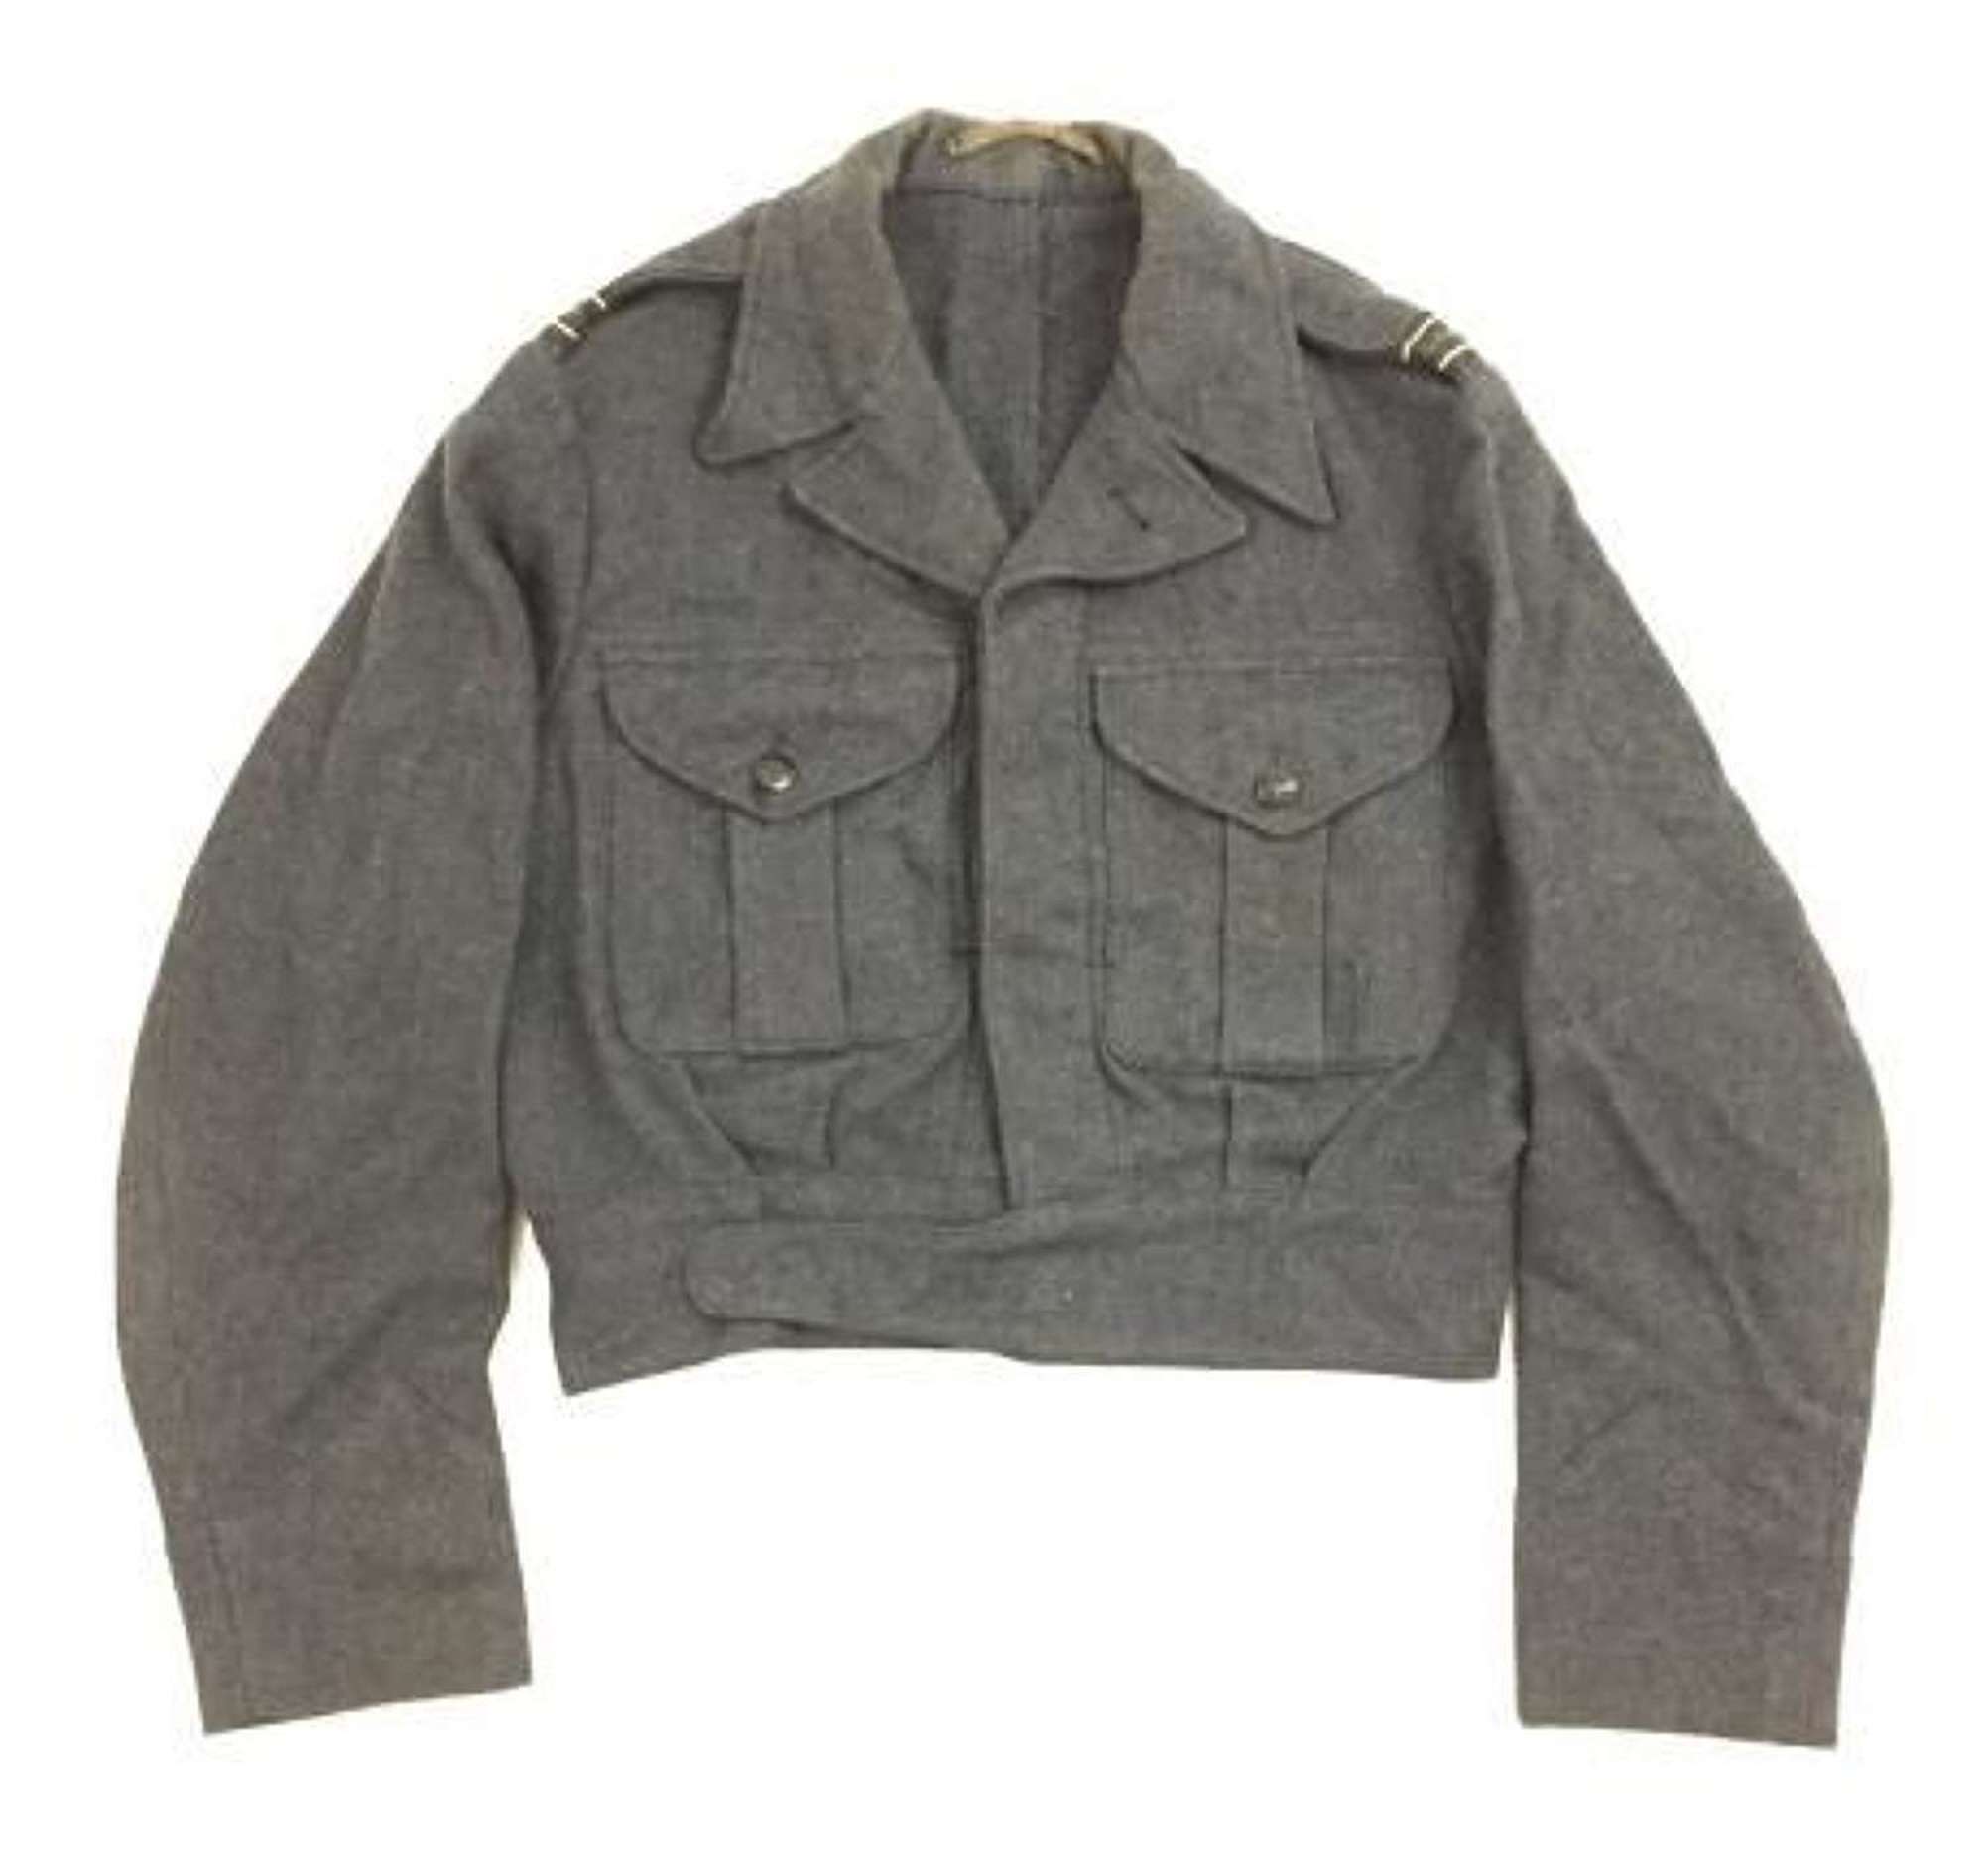 Original 1949 Dated RAF War Service Dress, Blouse, New Pattern